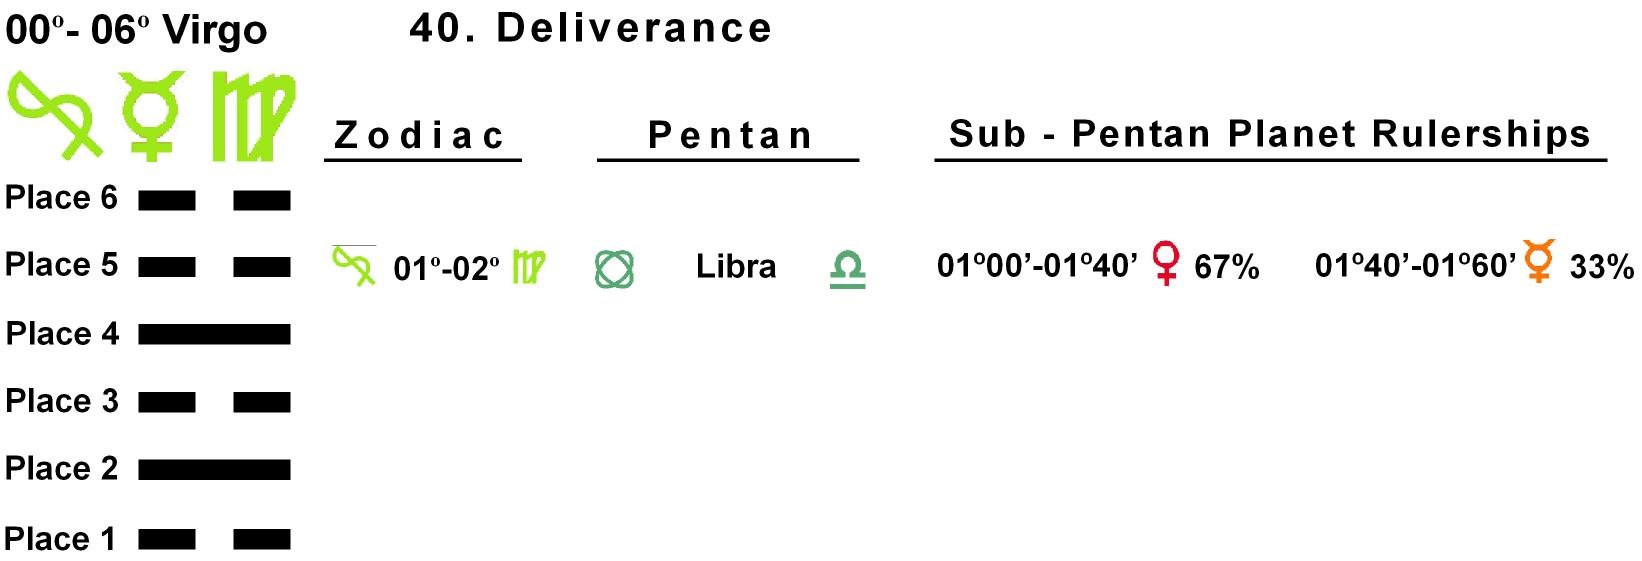 Pent-lines-06VI 01-02 Hx-40 Deliverance